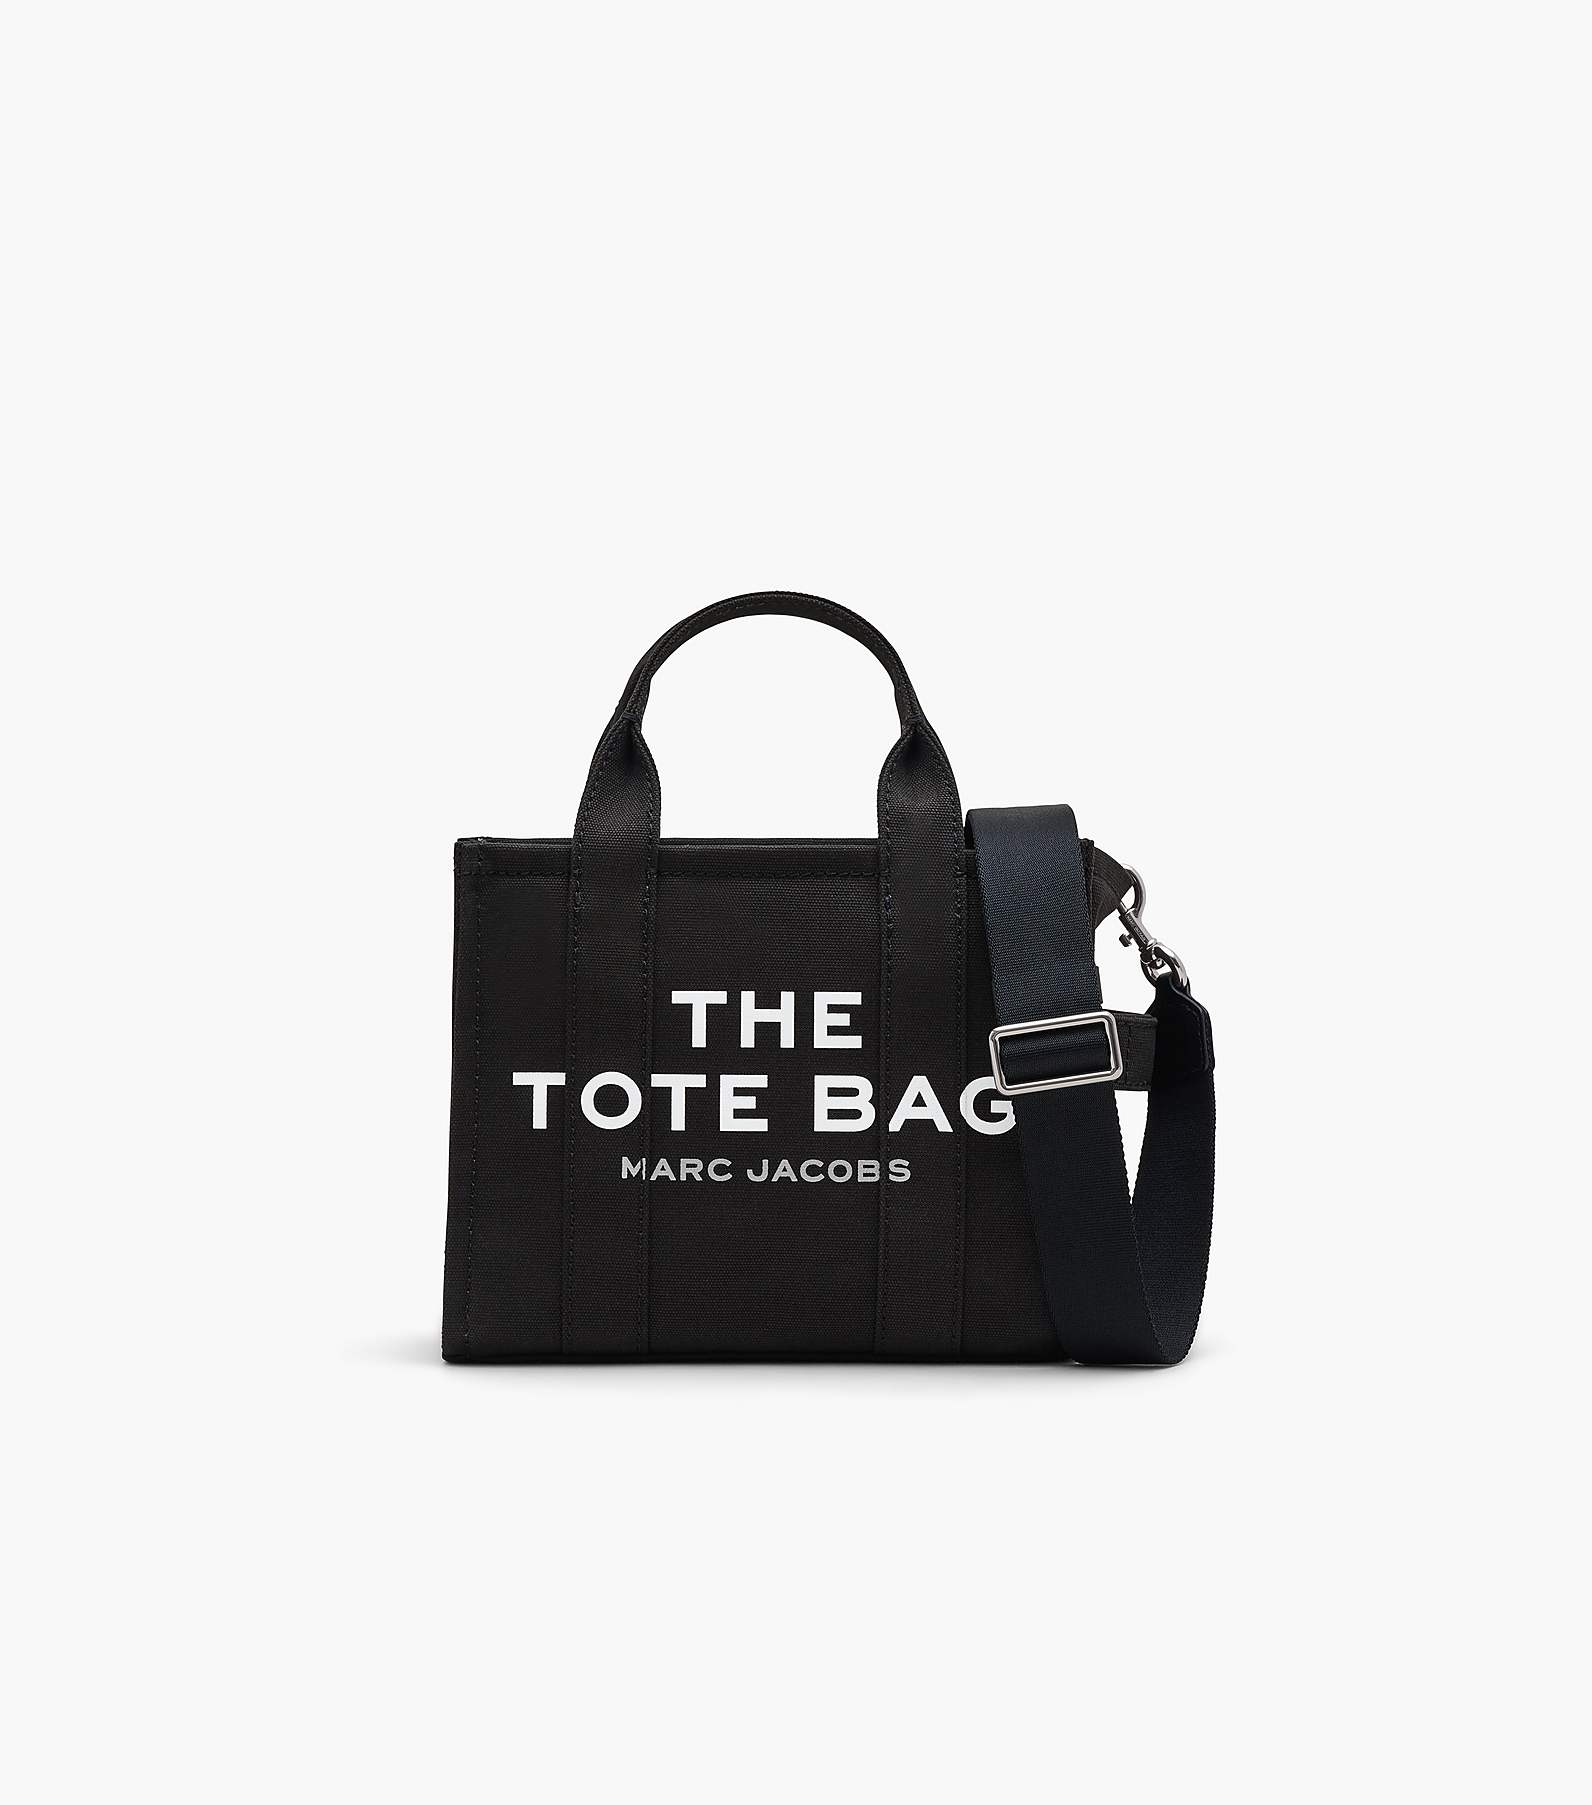 The Small Tote Bag   マーク ジェイコブス   公式サイト